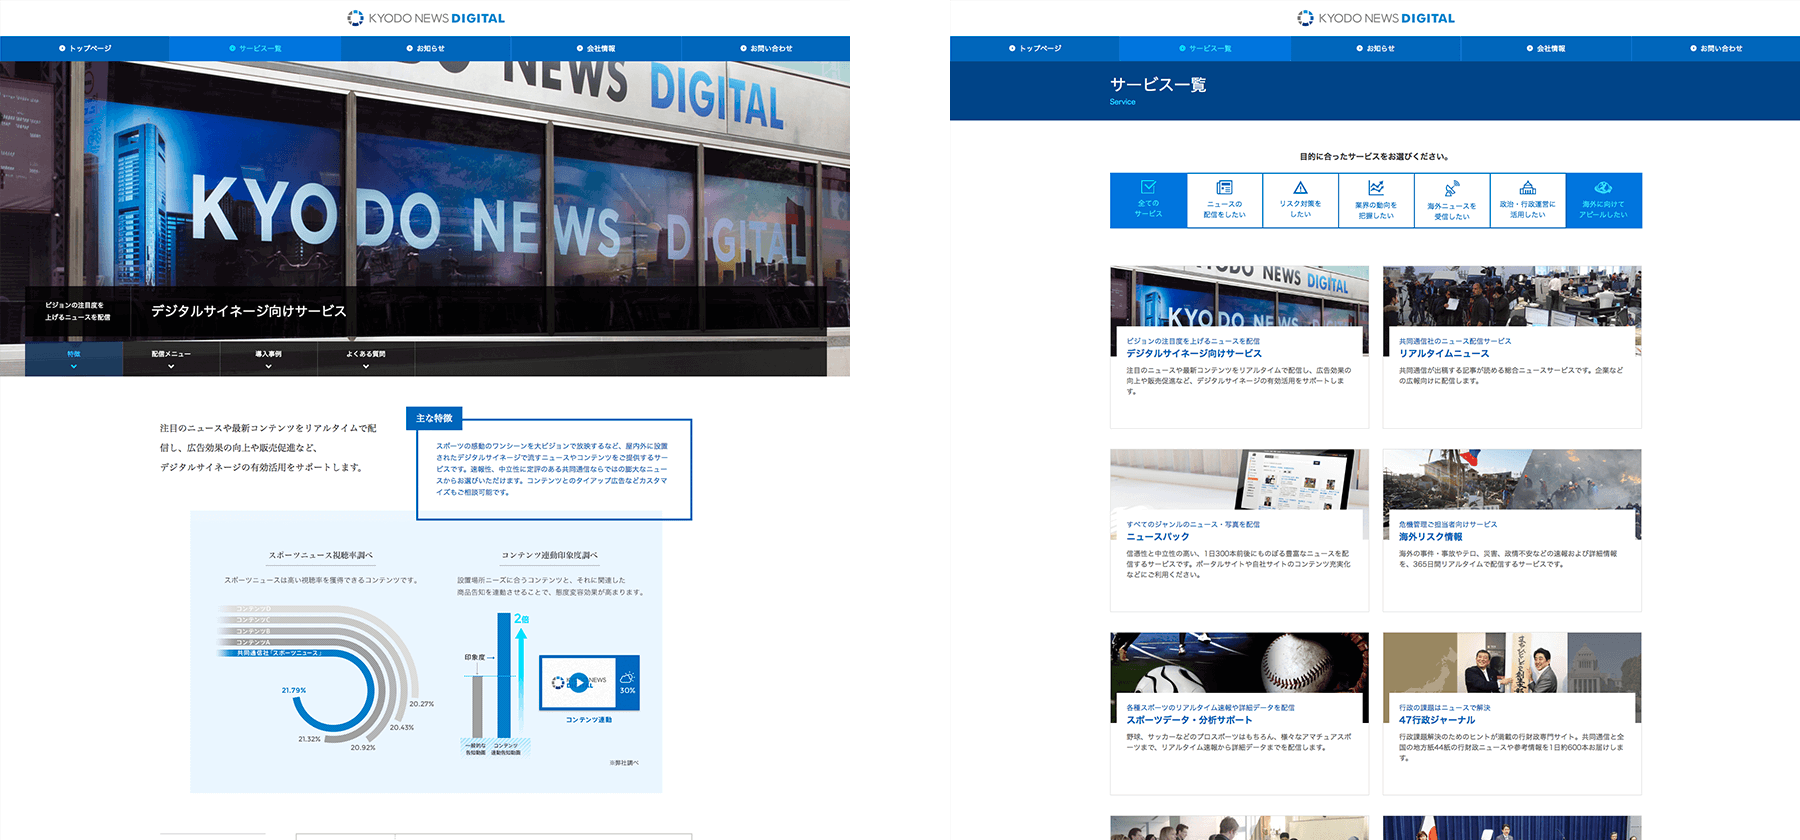 Kyodo News Digital / Corporate Website